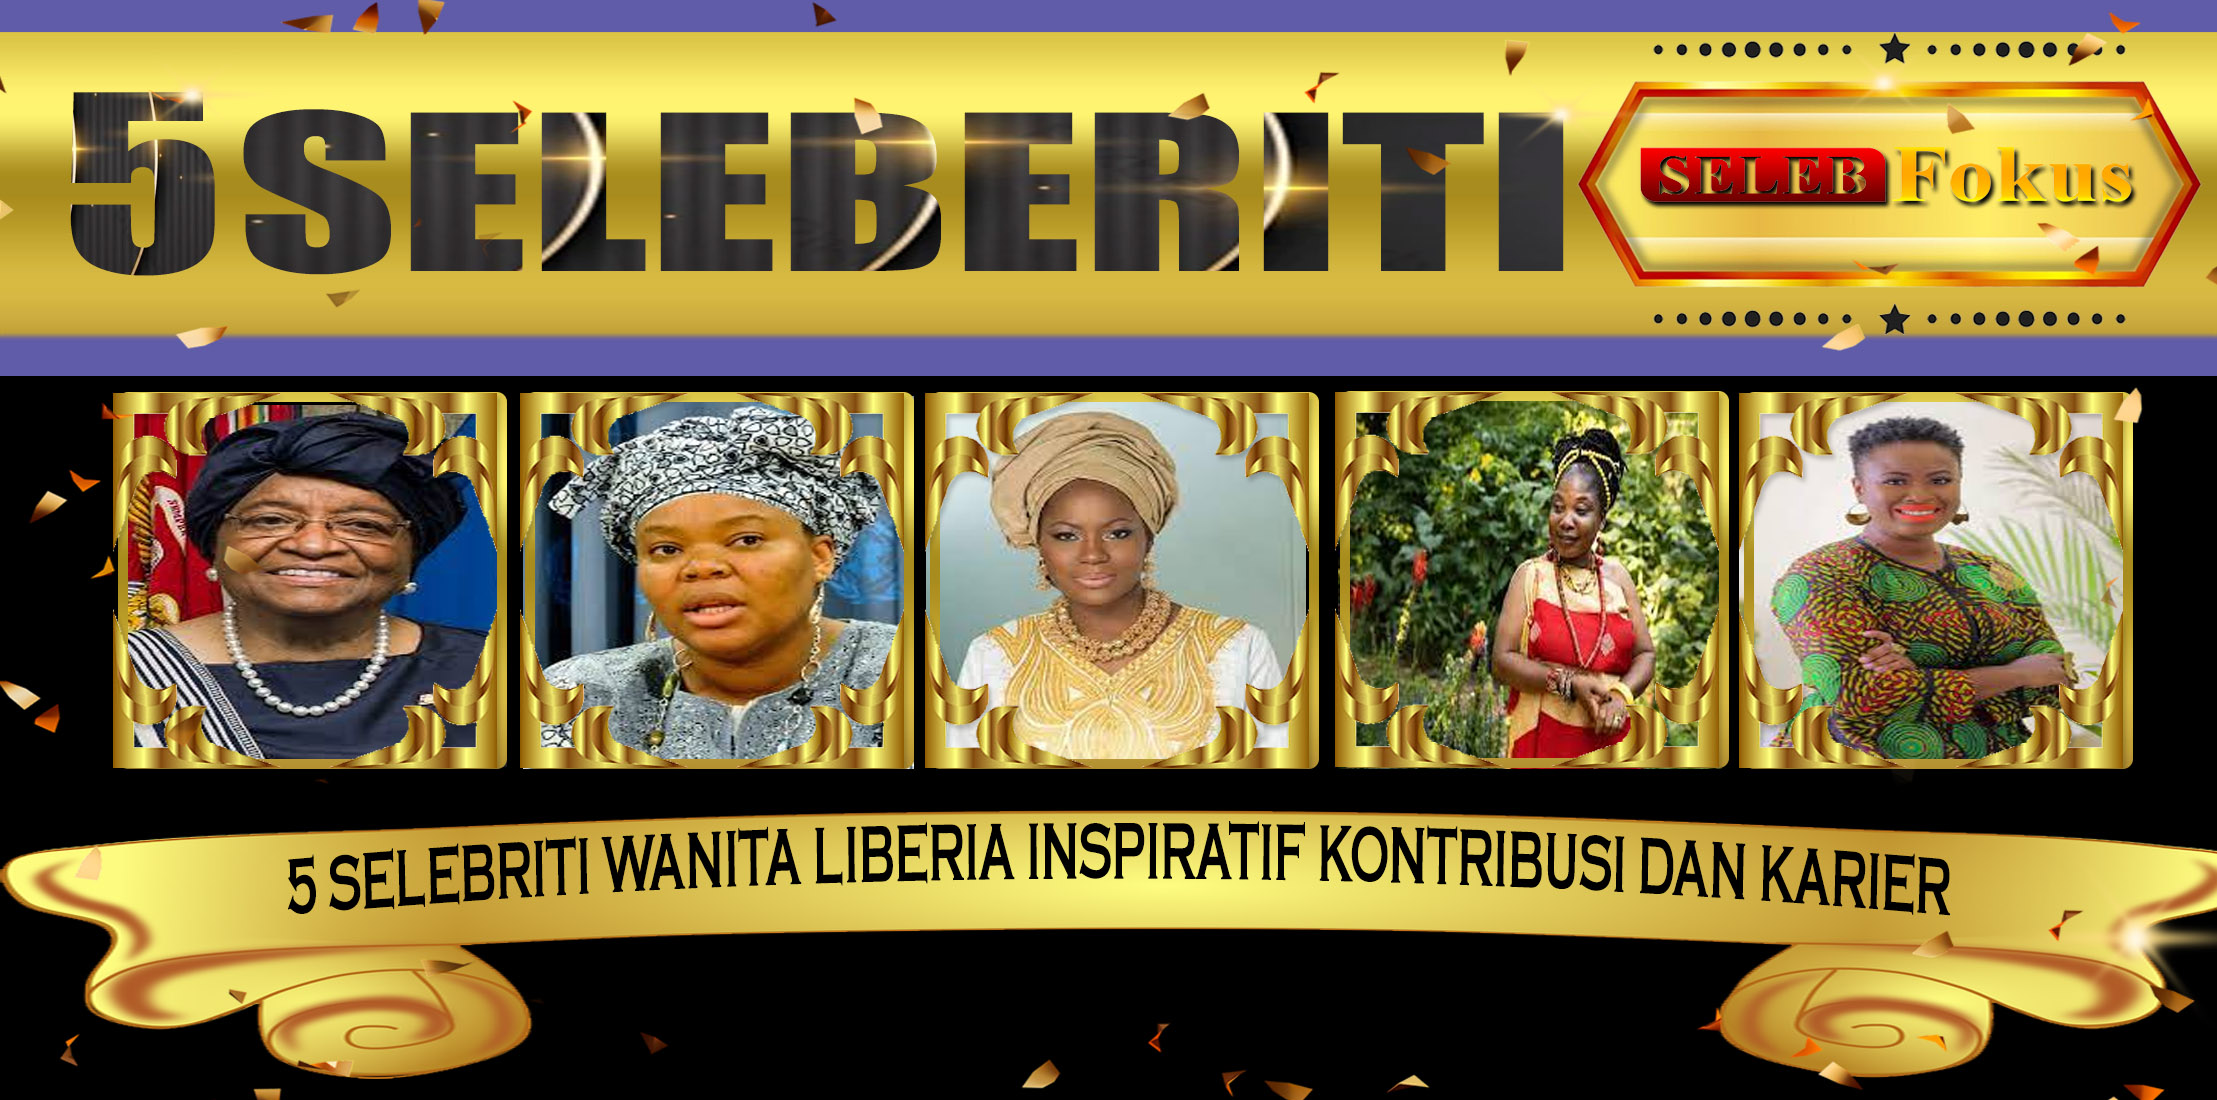 5 Selebriti Wanita Liberia